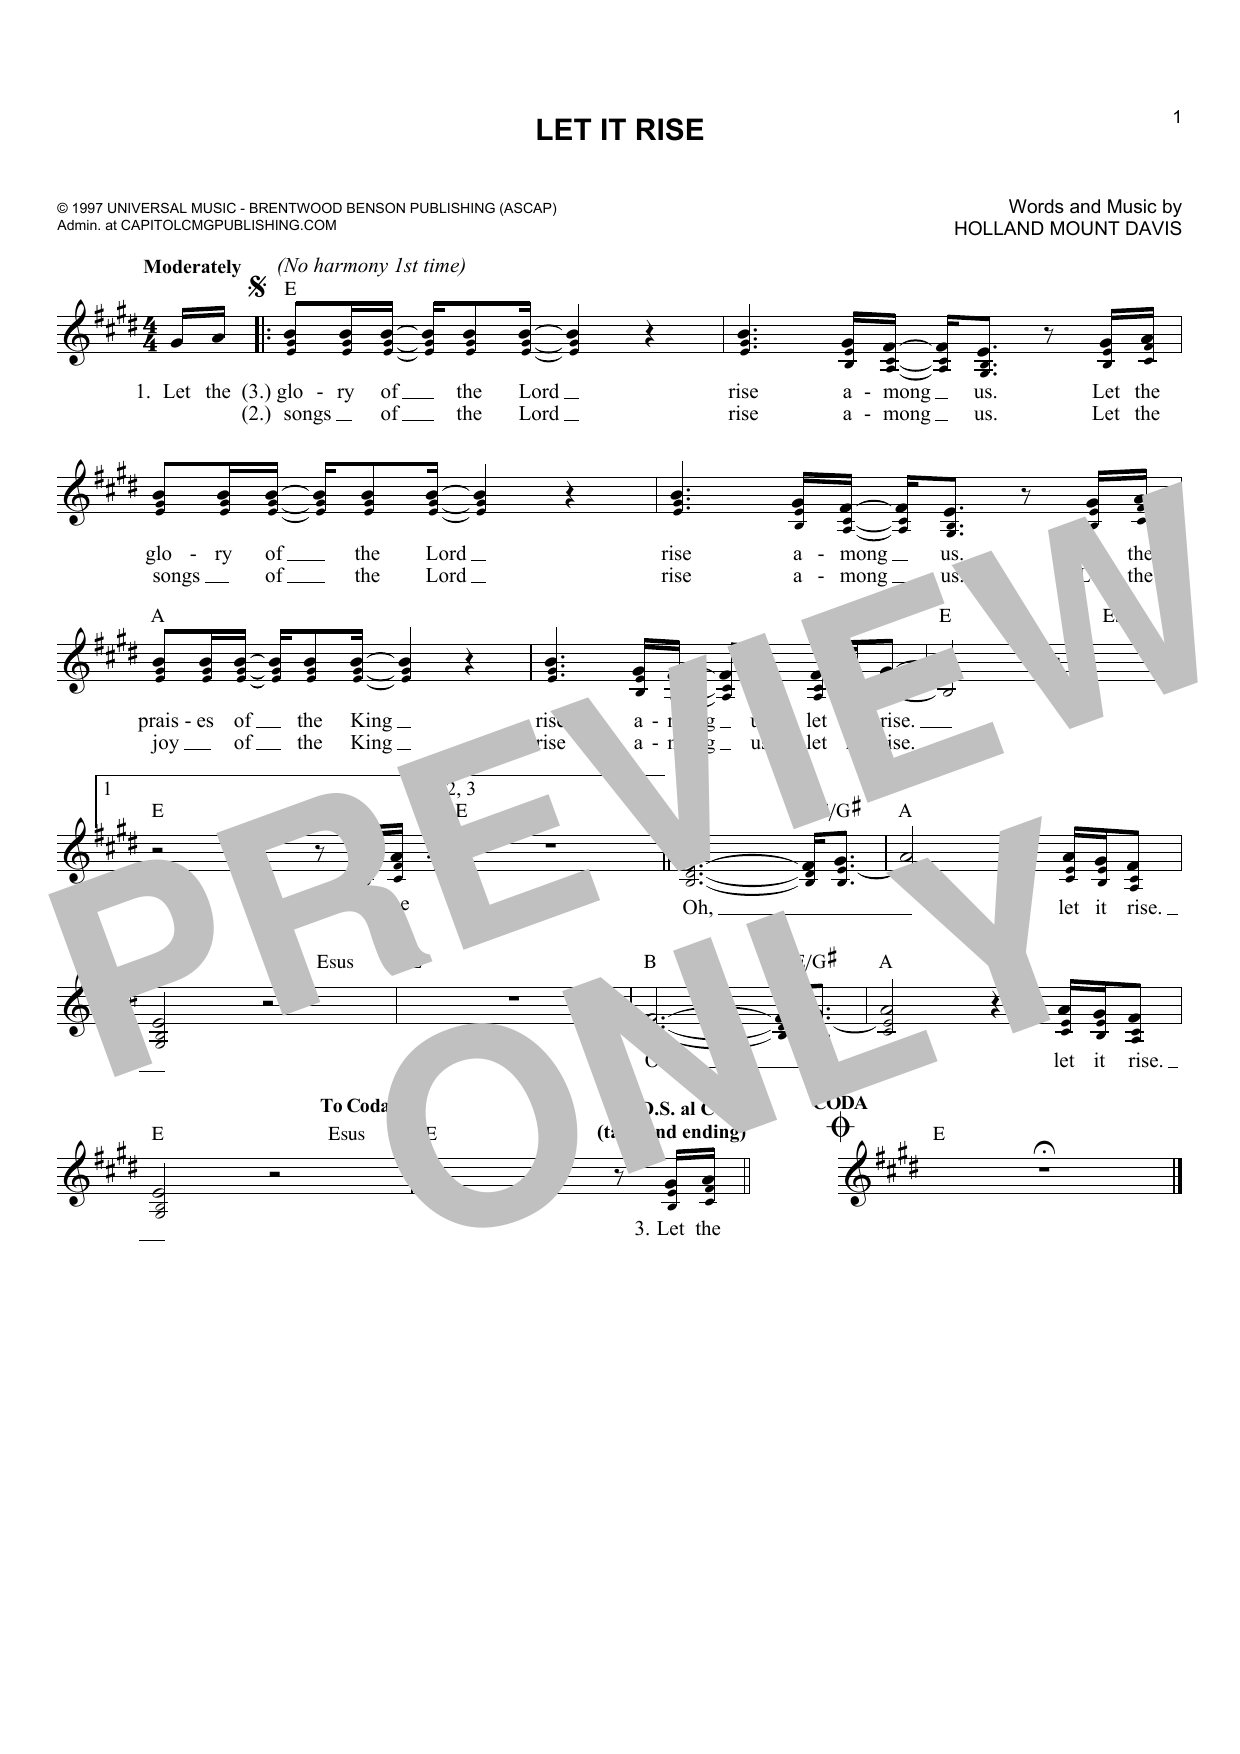 Holland Mount Davis Let It Rise Sheet Music Notes & Chords for Melody Line, Lyrics & Chords - Download or Print PDF